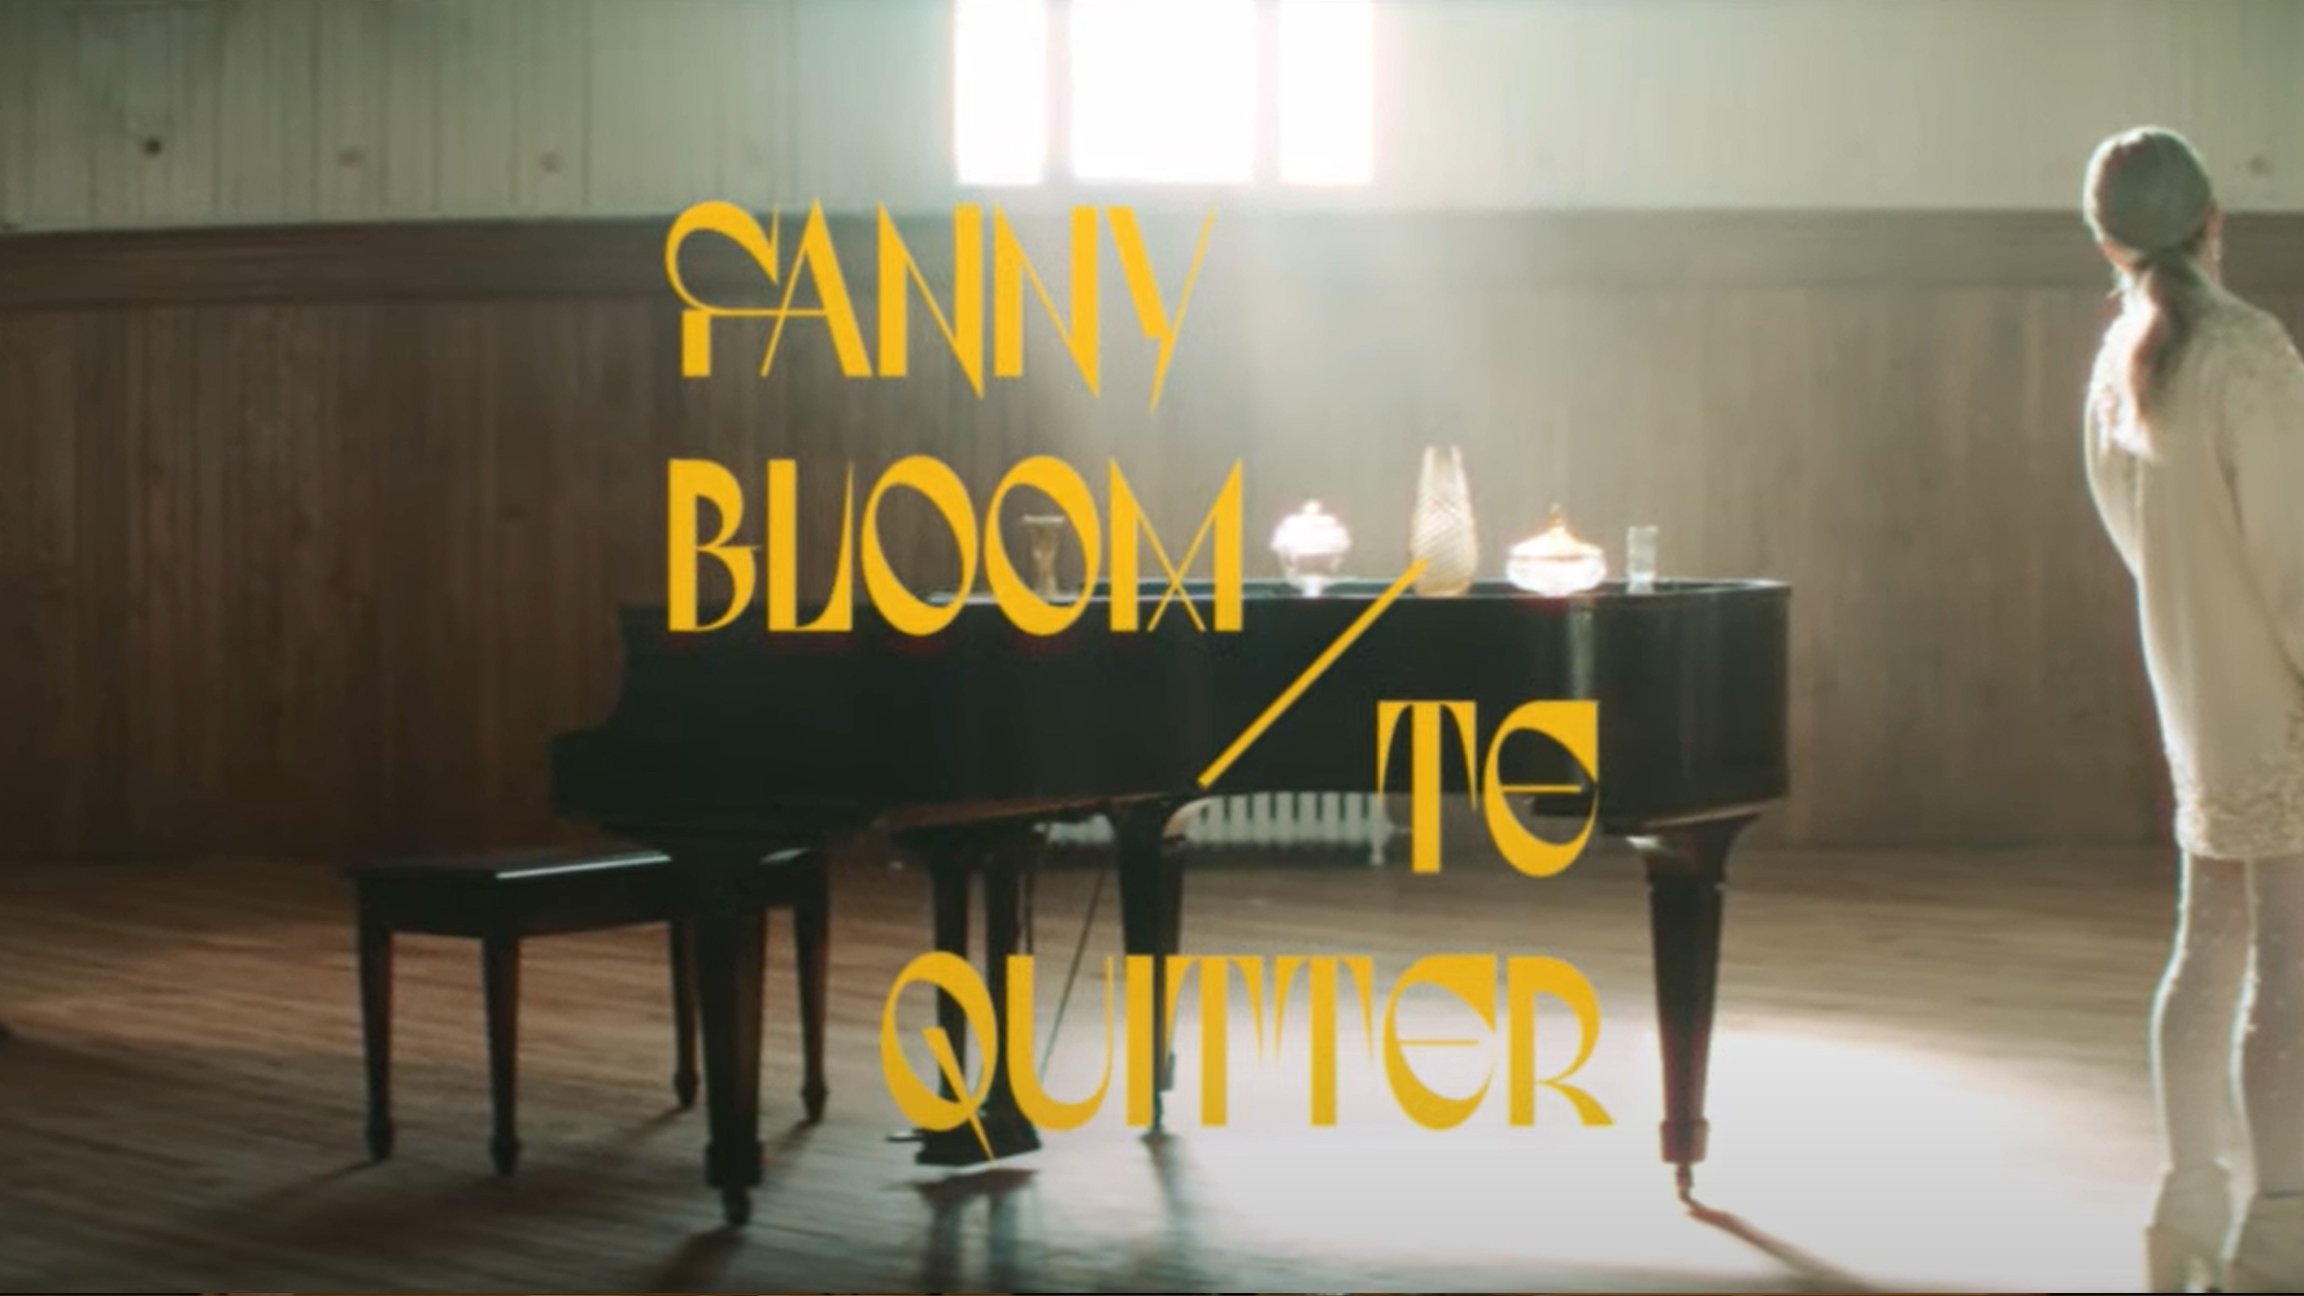 Fanny Bloom - Te Quitter (Vidéoclip)